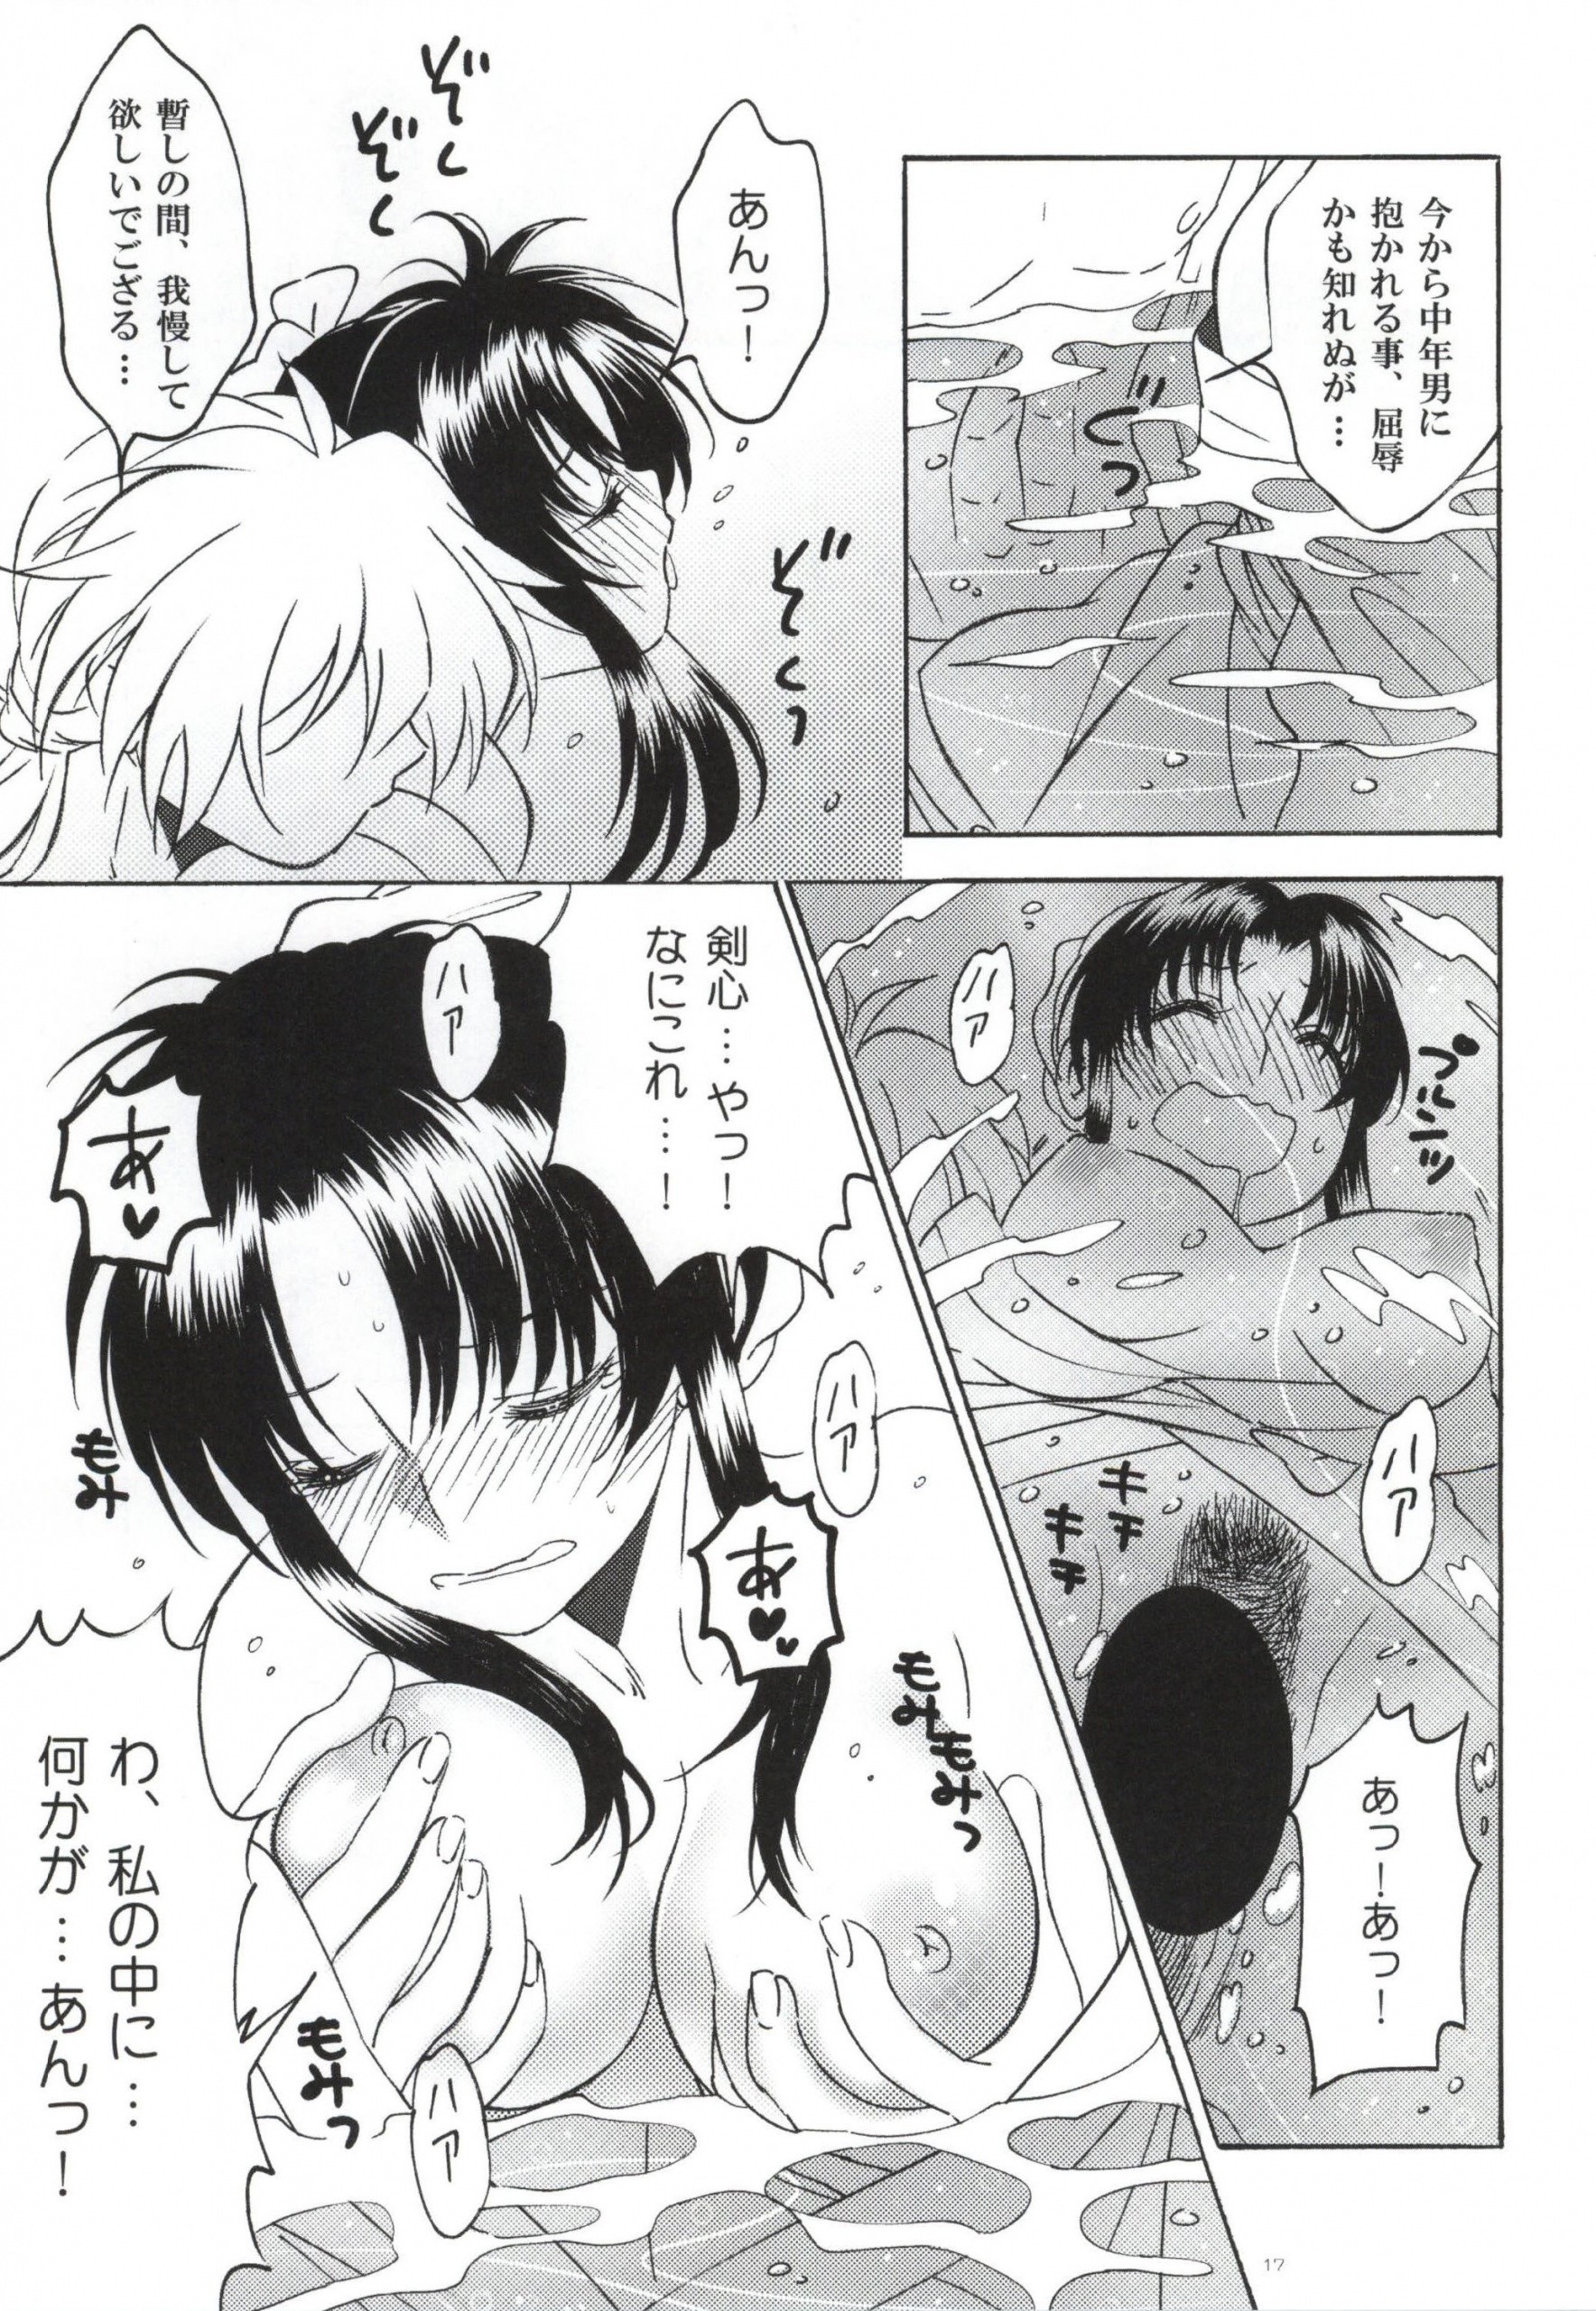 Sazanami Romantica hentai manga picture 13